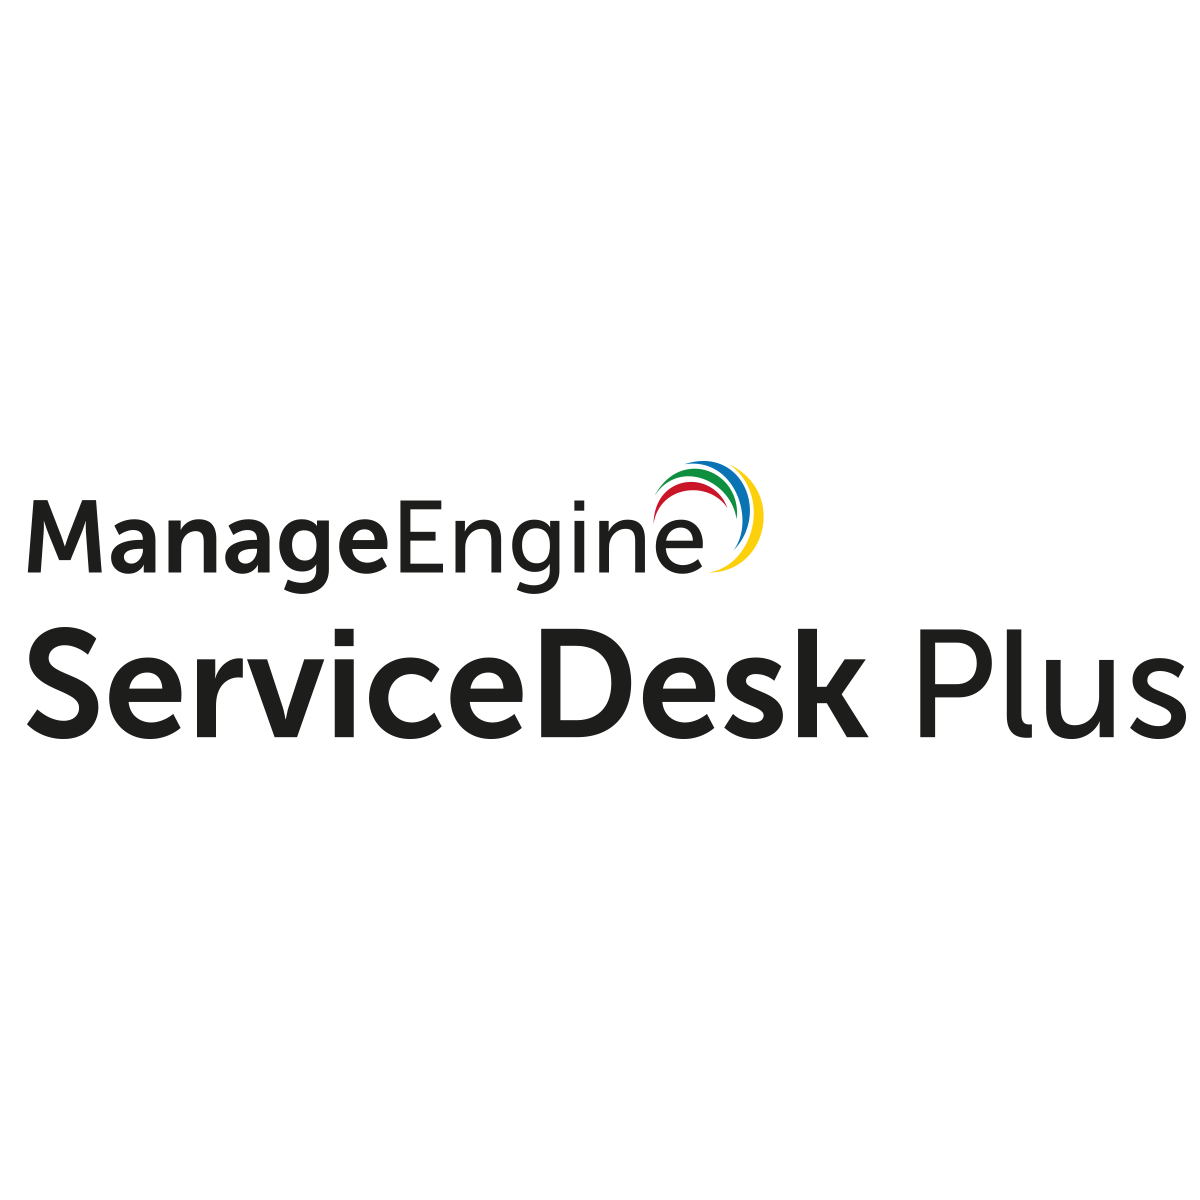 ManageEngine Service Desk Plus